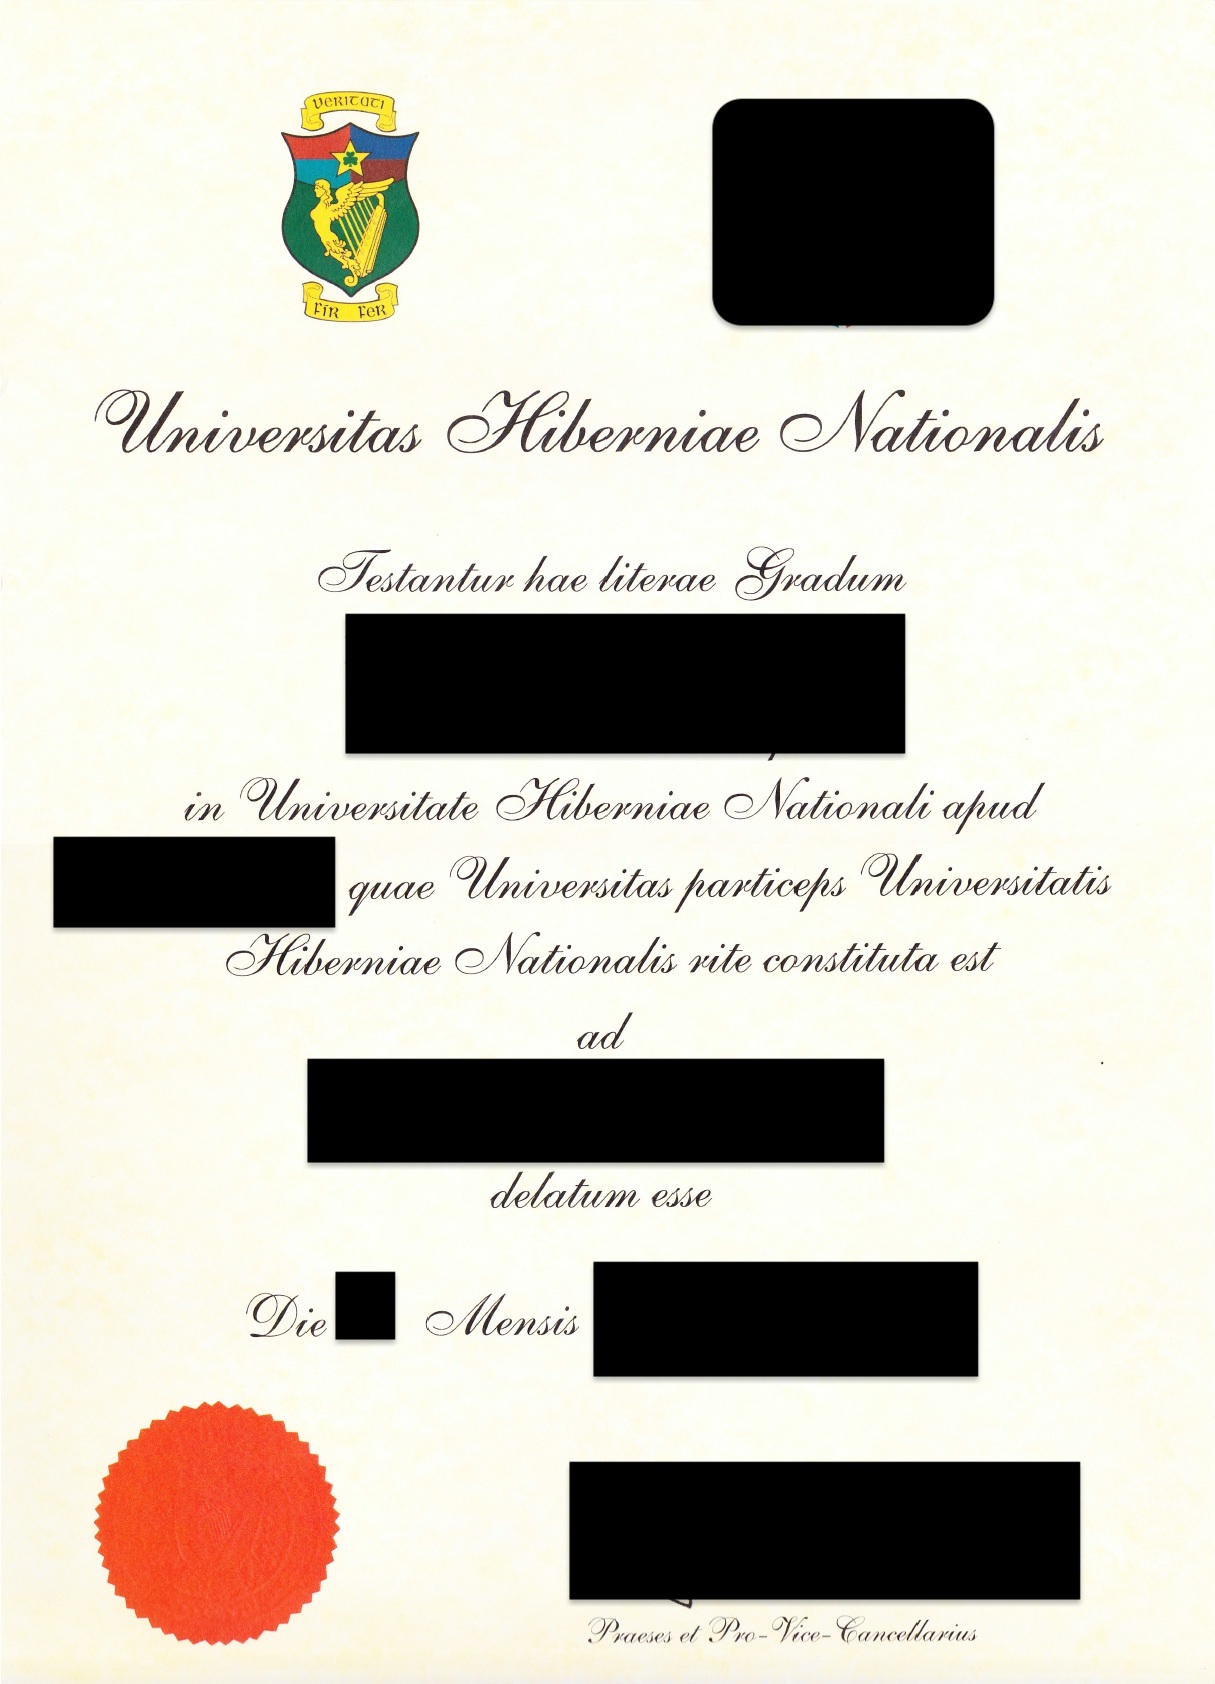 Certified Translation of National University of Ireland Degree from Latin to English